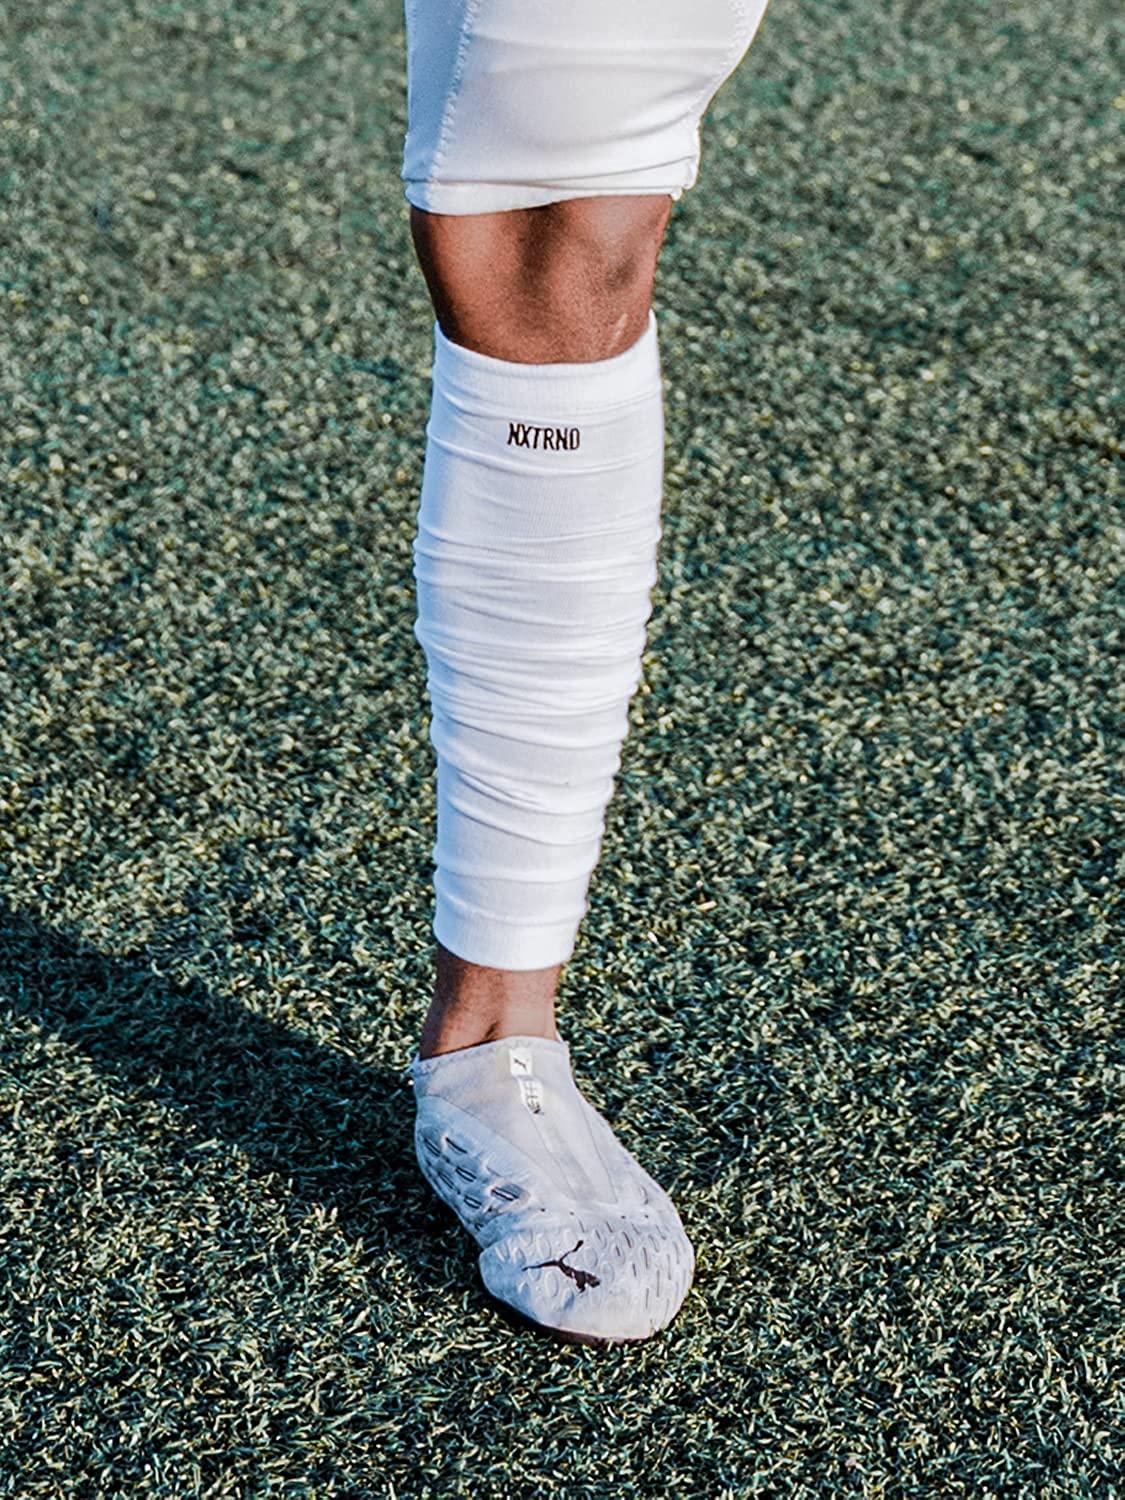  Nxtrnd Football Leg Sleeves, Calf Sleeves For Men